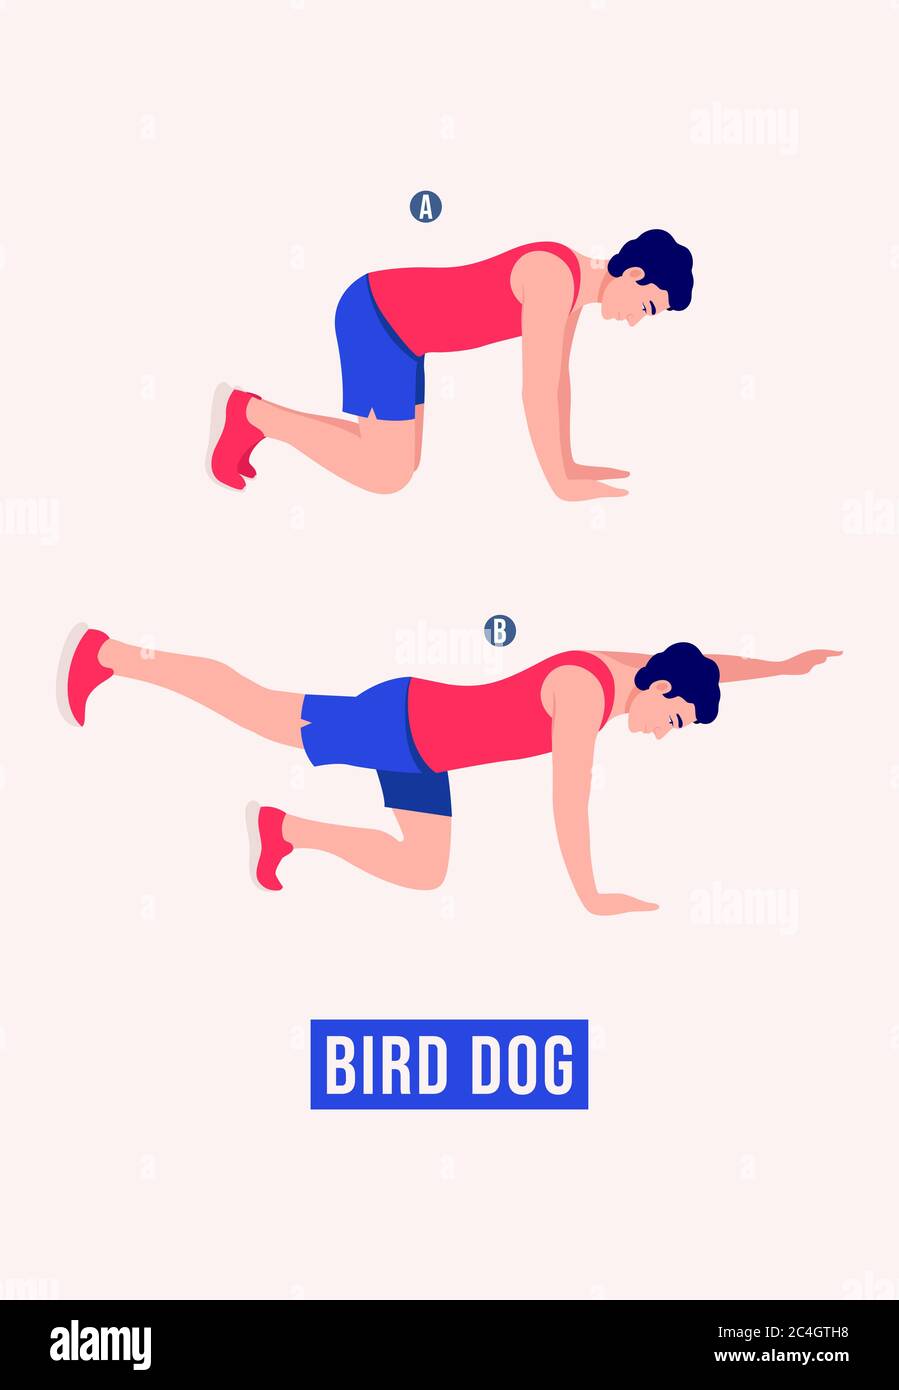 1,200+ Bird Dog Exercise Stock Photos, Pictures & Royalty-Free